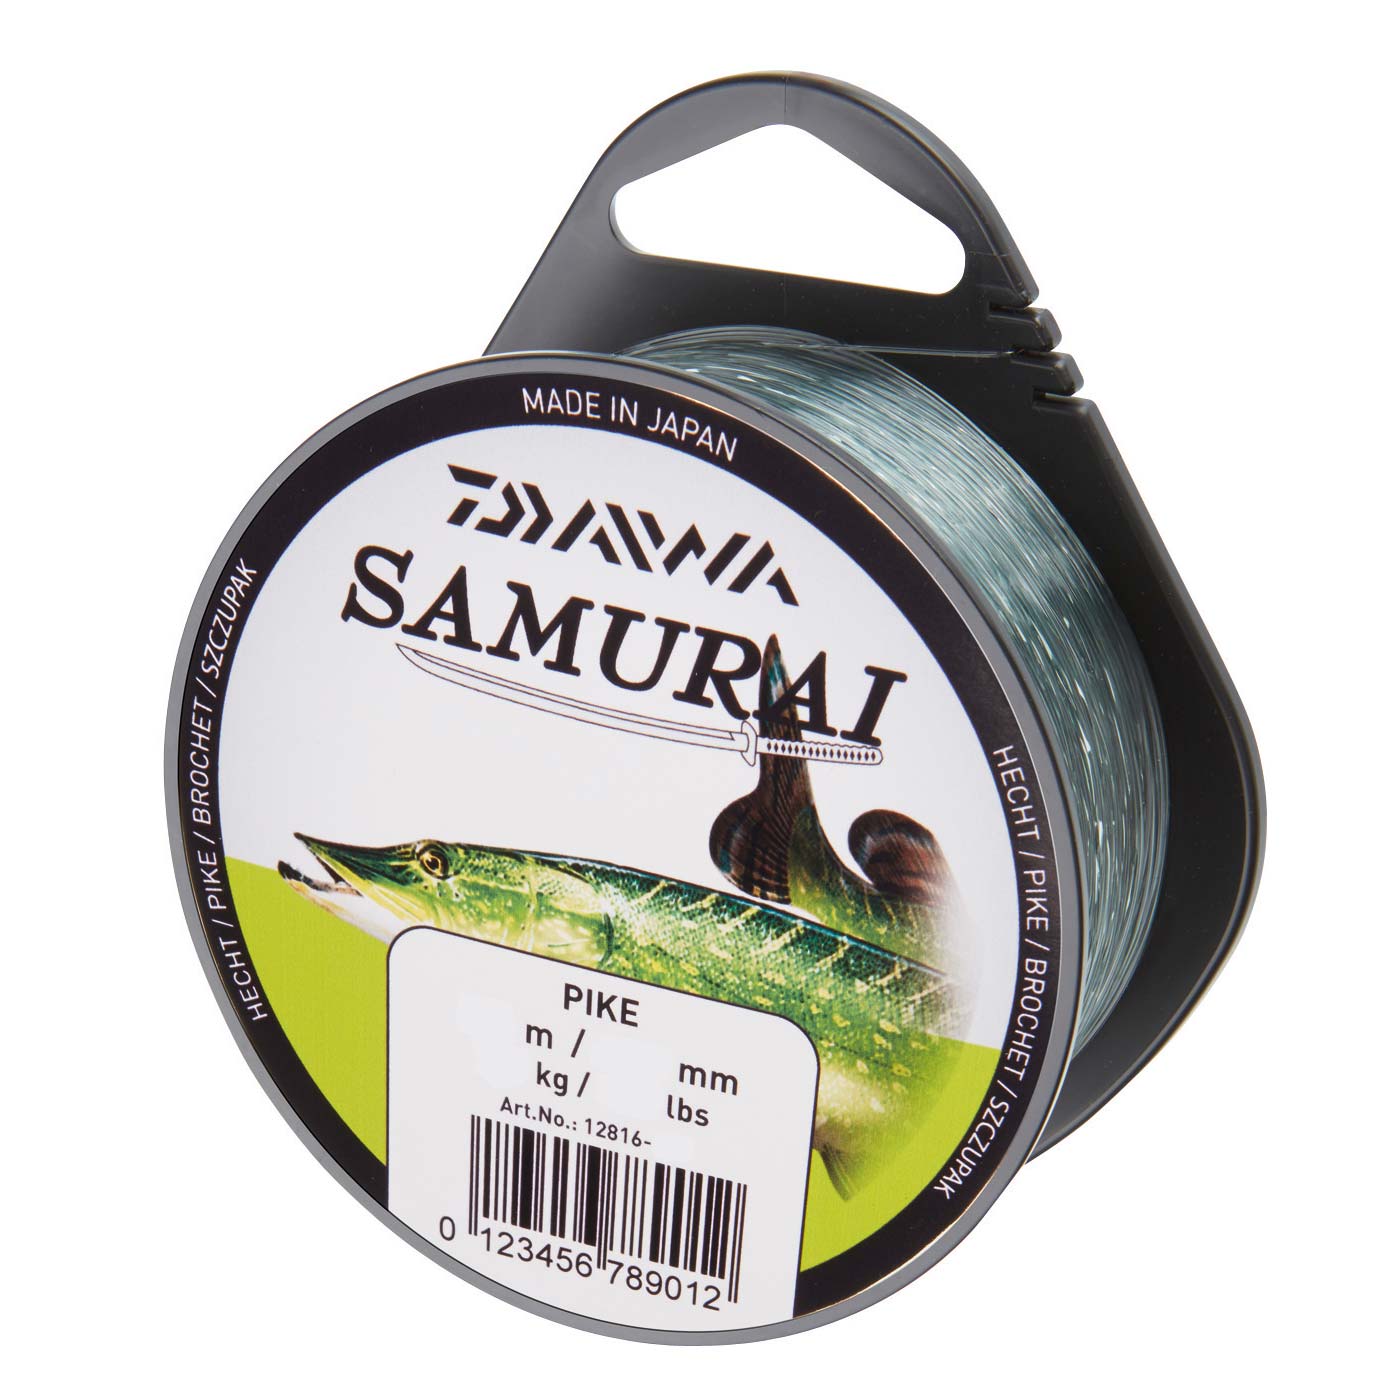 Daiwa Samurai Pike Olive Green, 0.35mm / 10.1kg / 350m